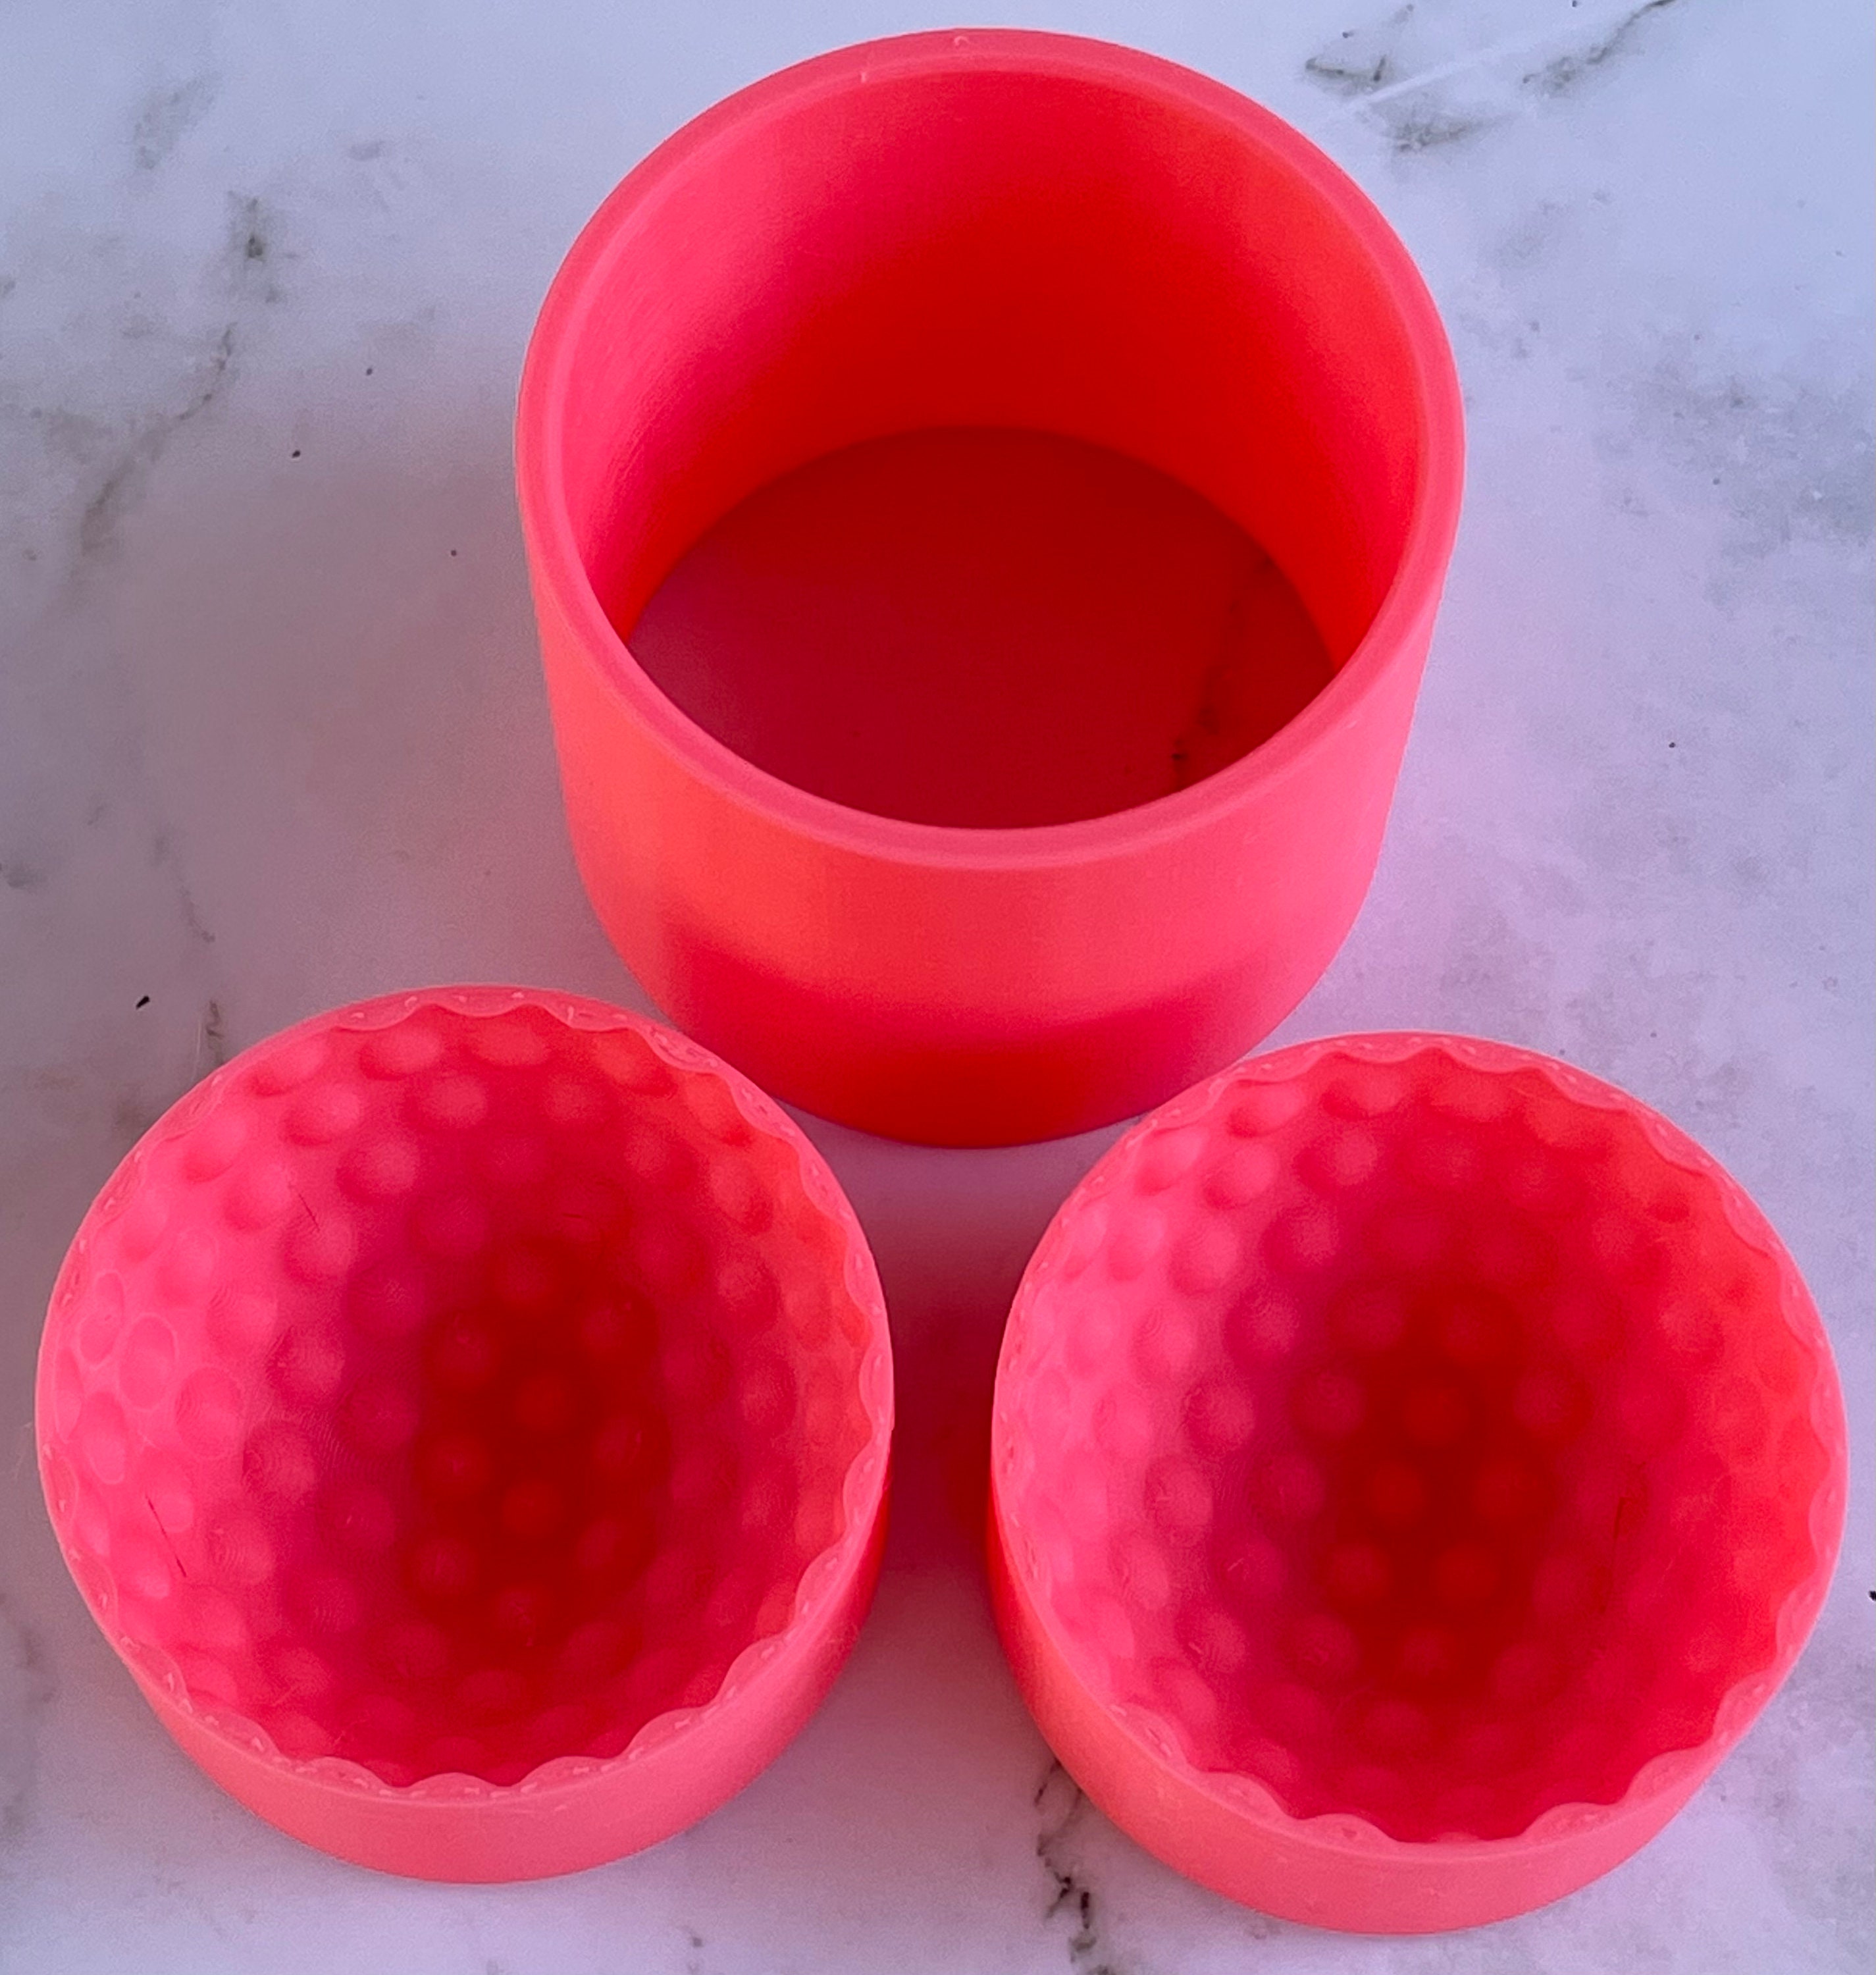 Fairways Set of 2 Golf Ball Ice Molds in Gift Box 